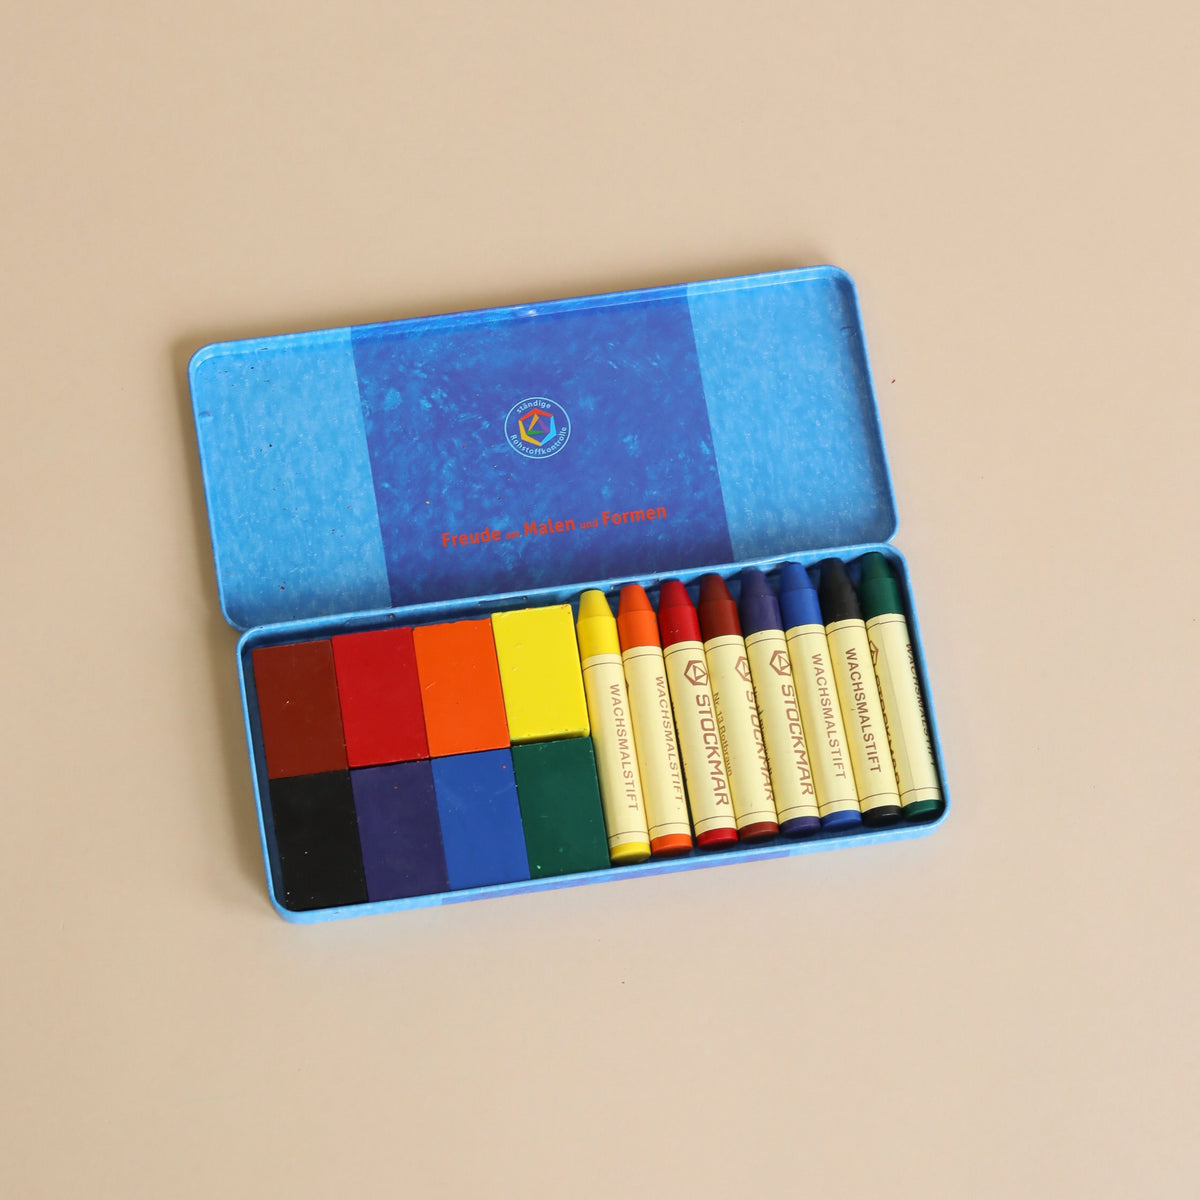 Stockmar Beeswax Crayons - 8 Blocks